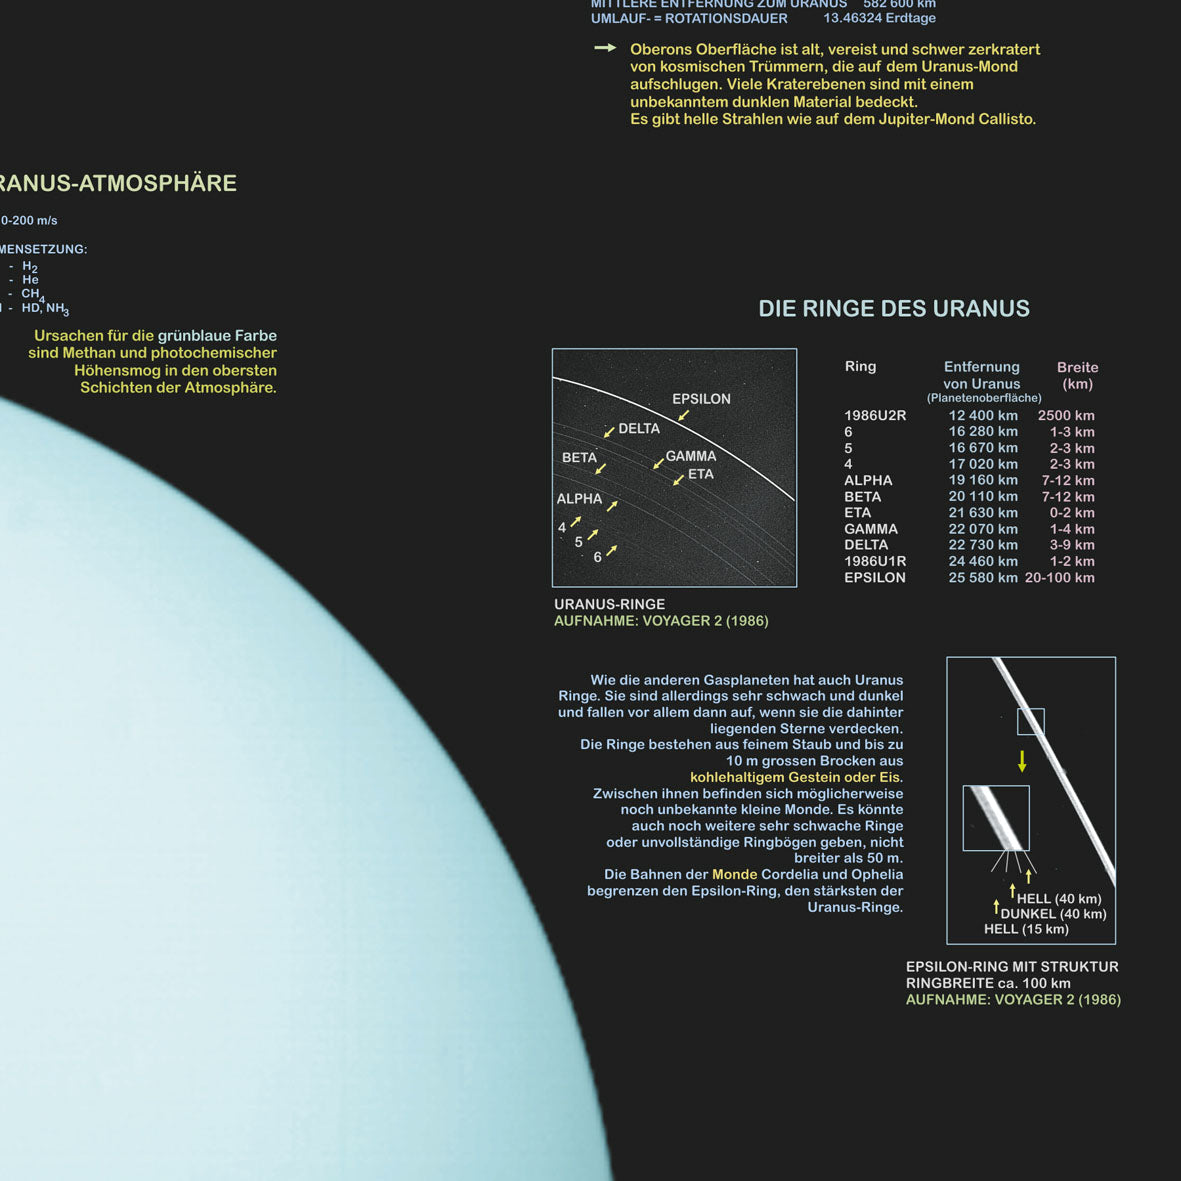 Poster "Planet Uranus"